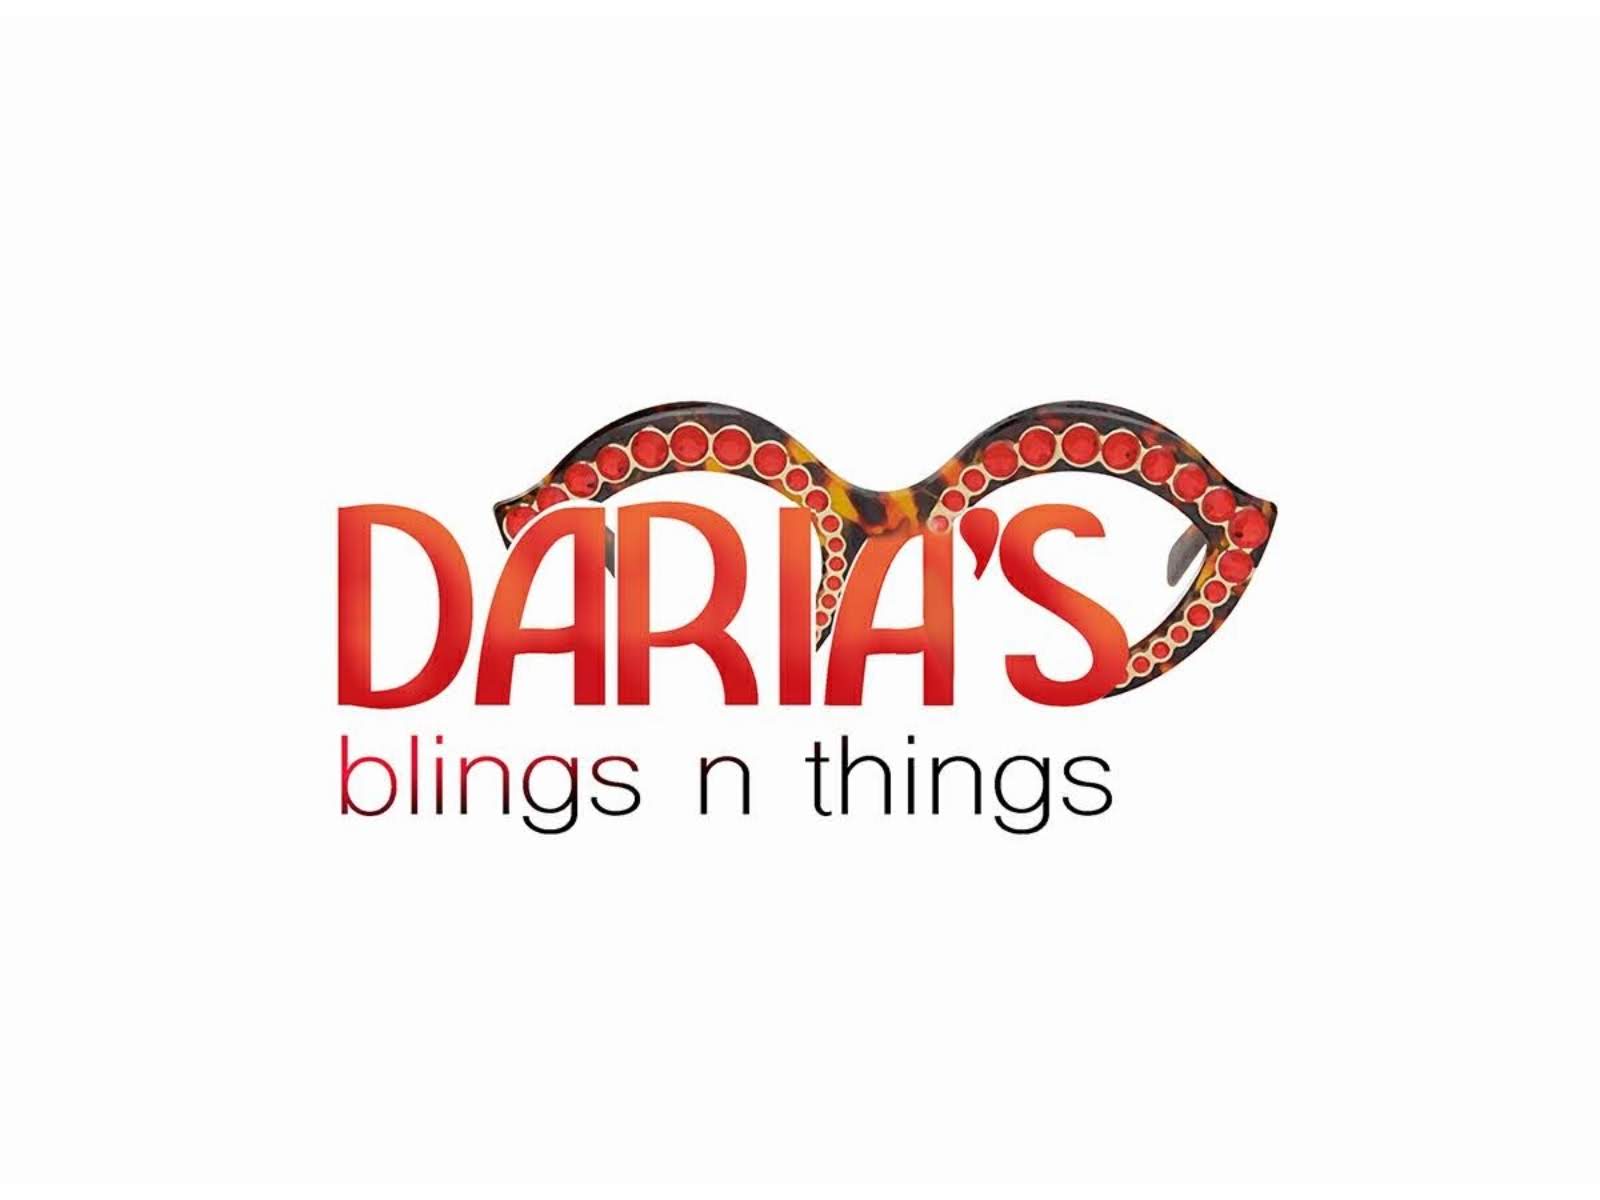 The logo or business face of "Daria's Blings N Things "